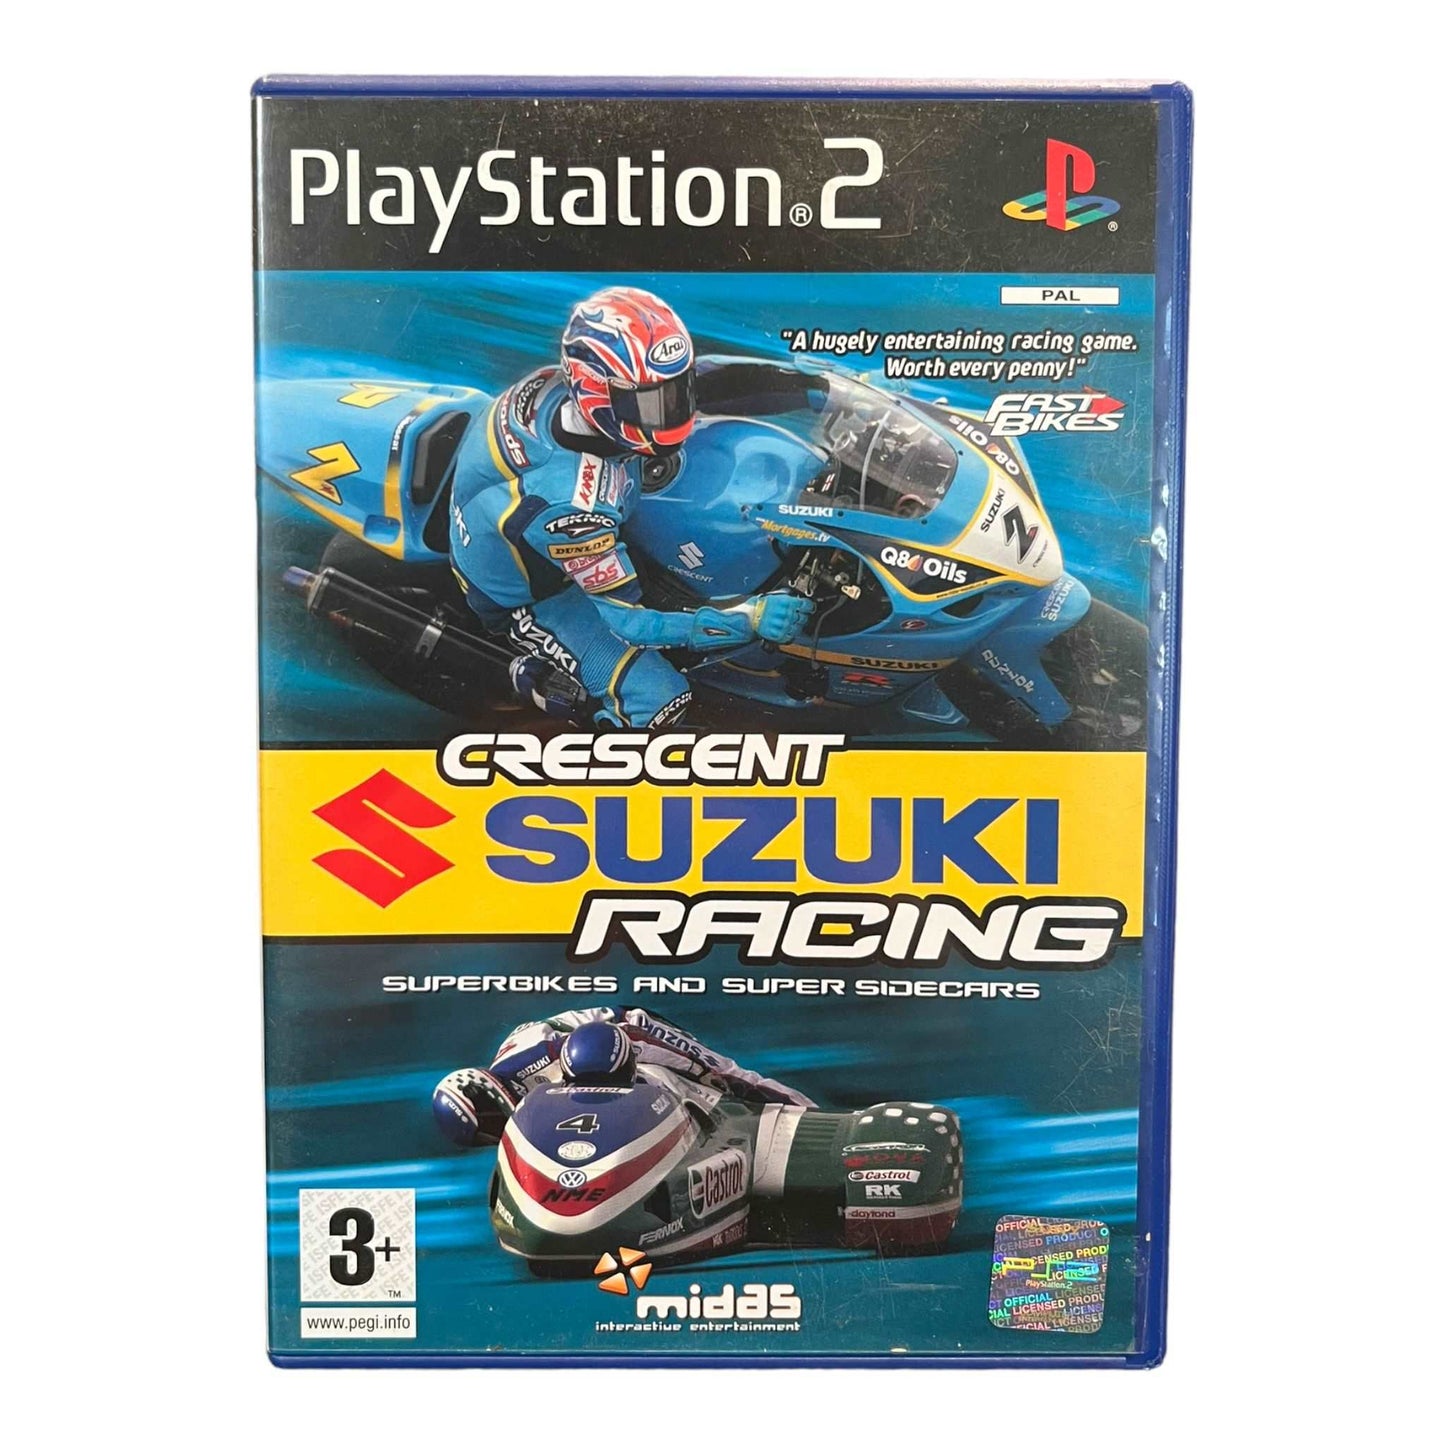 Crescent Suzuki Racing: Superbikes And Super Sidecars - PS2